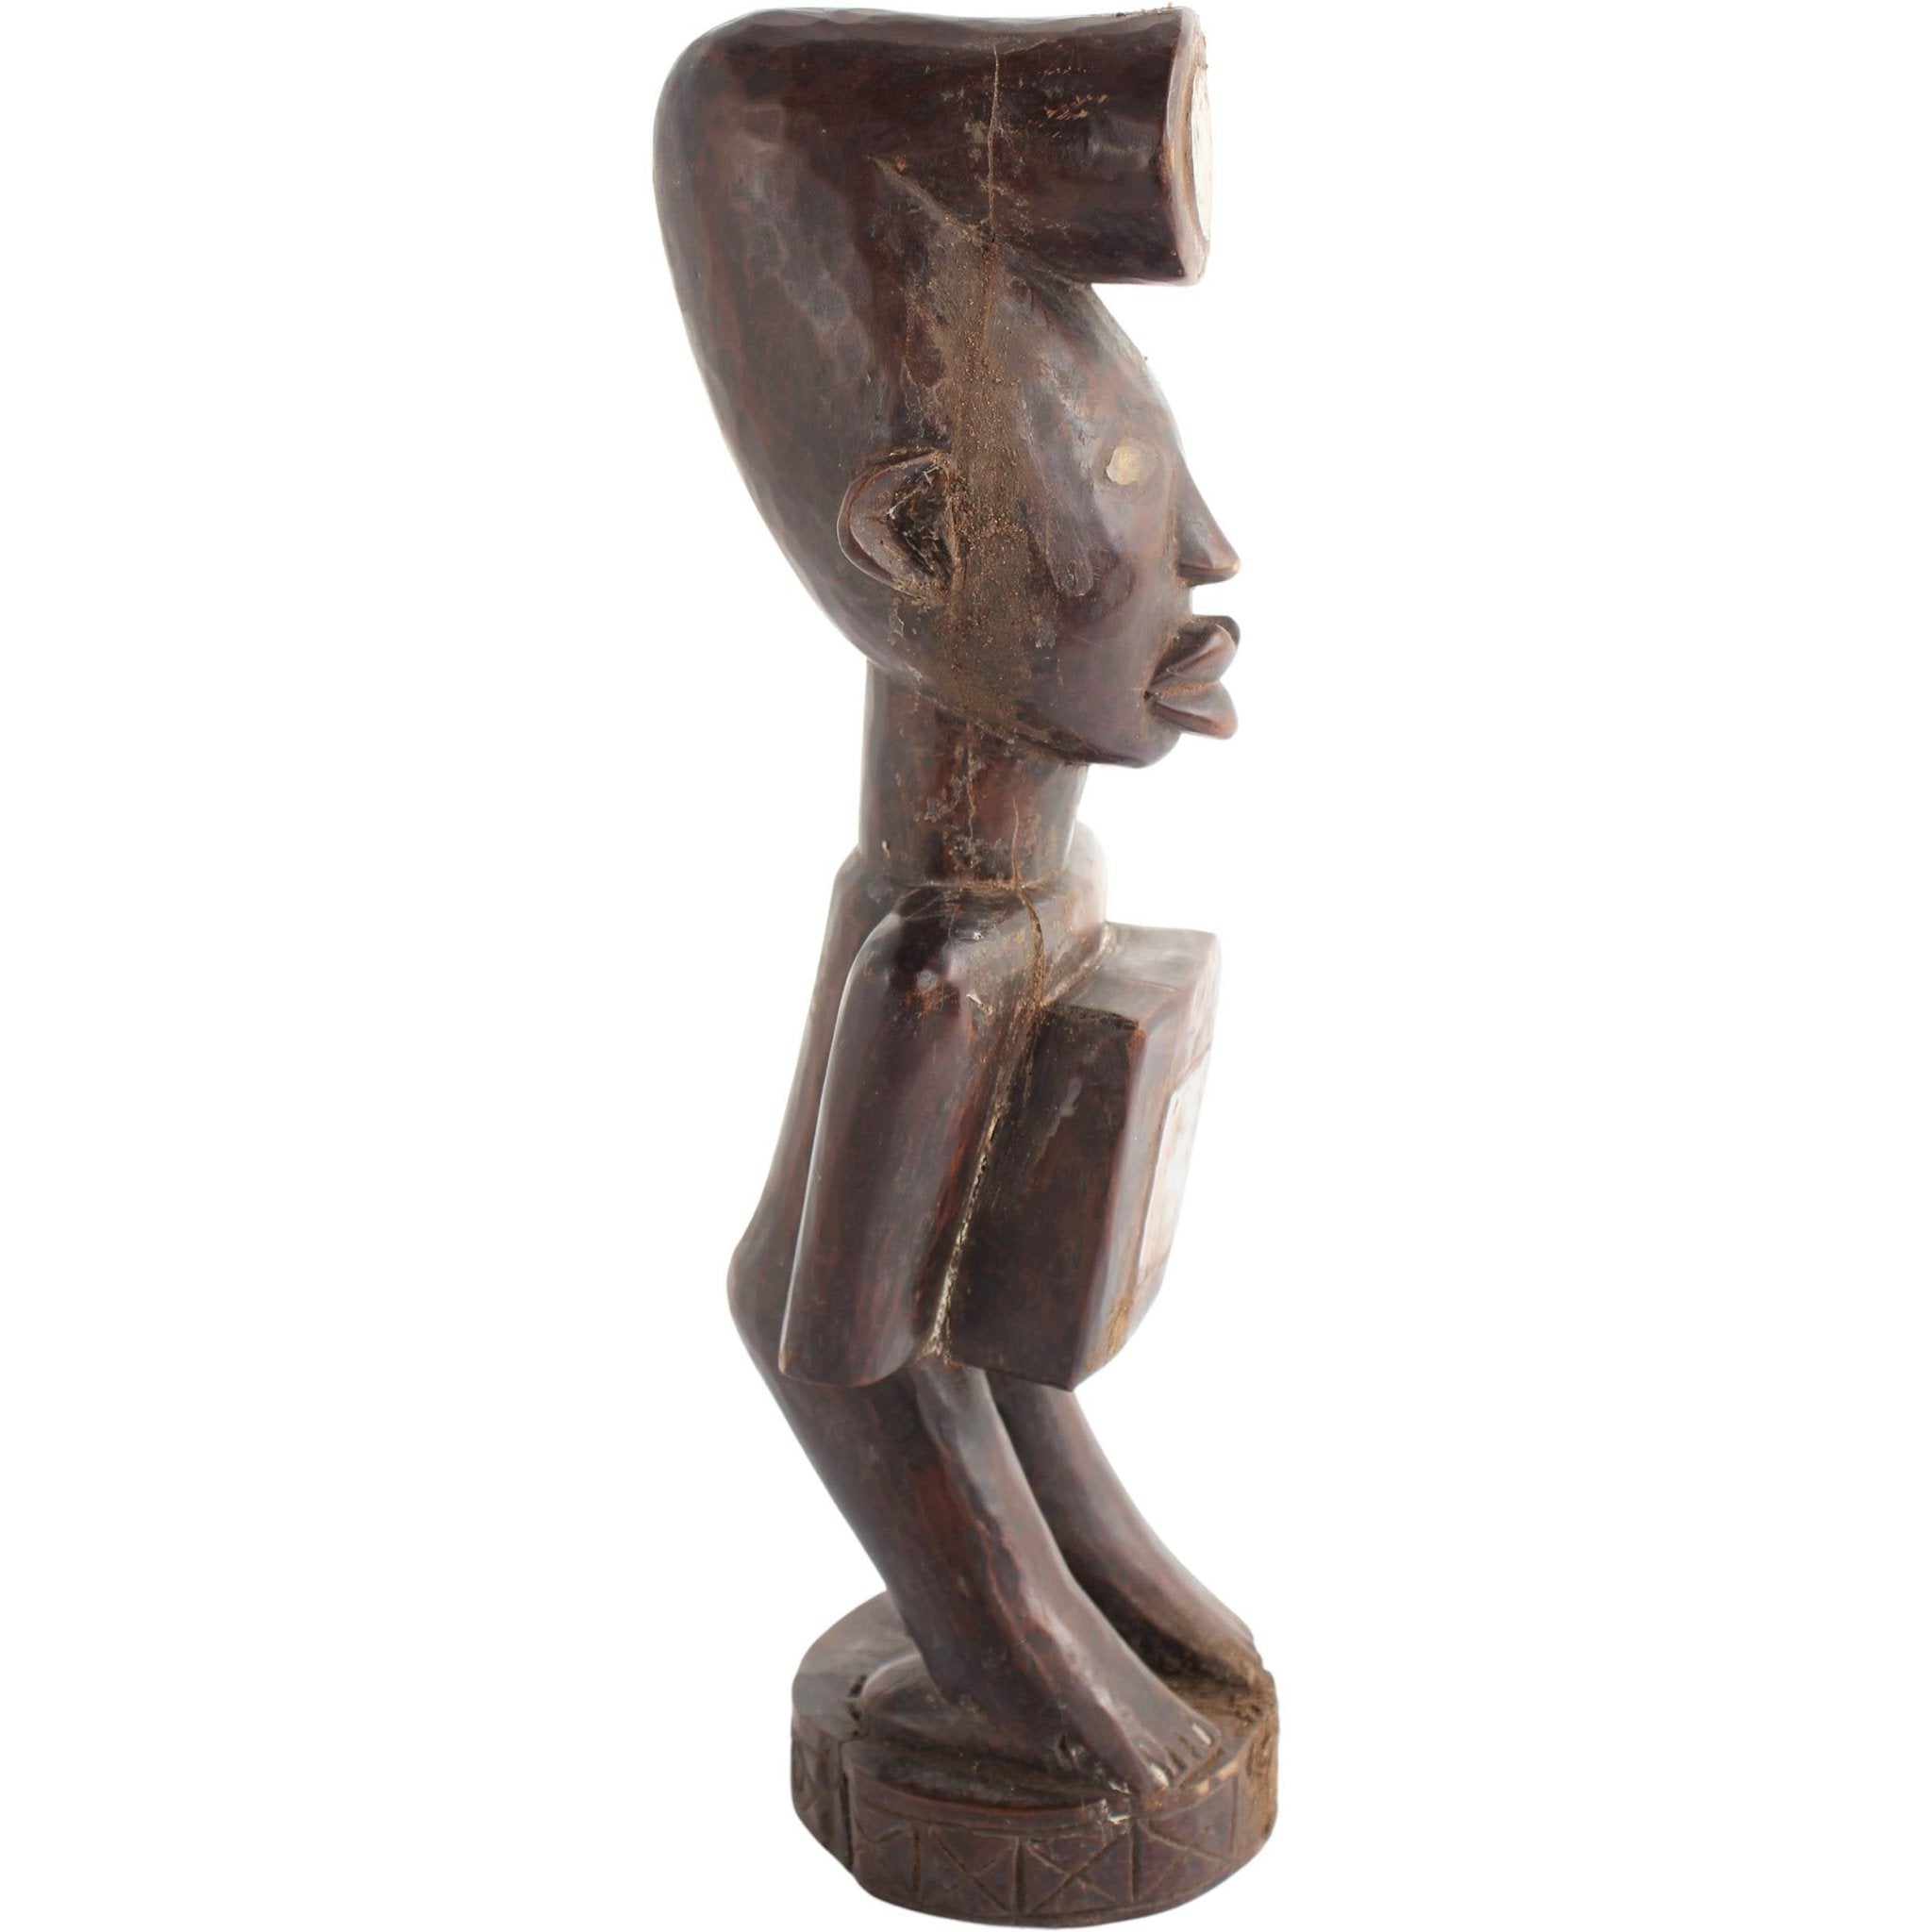 Basonge/Songye Tribe Figurine ~13.0" Tall - African Angel Art - Figurine